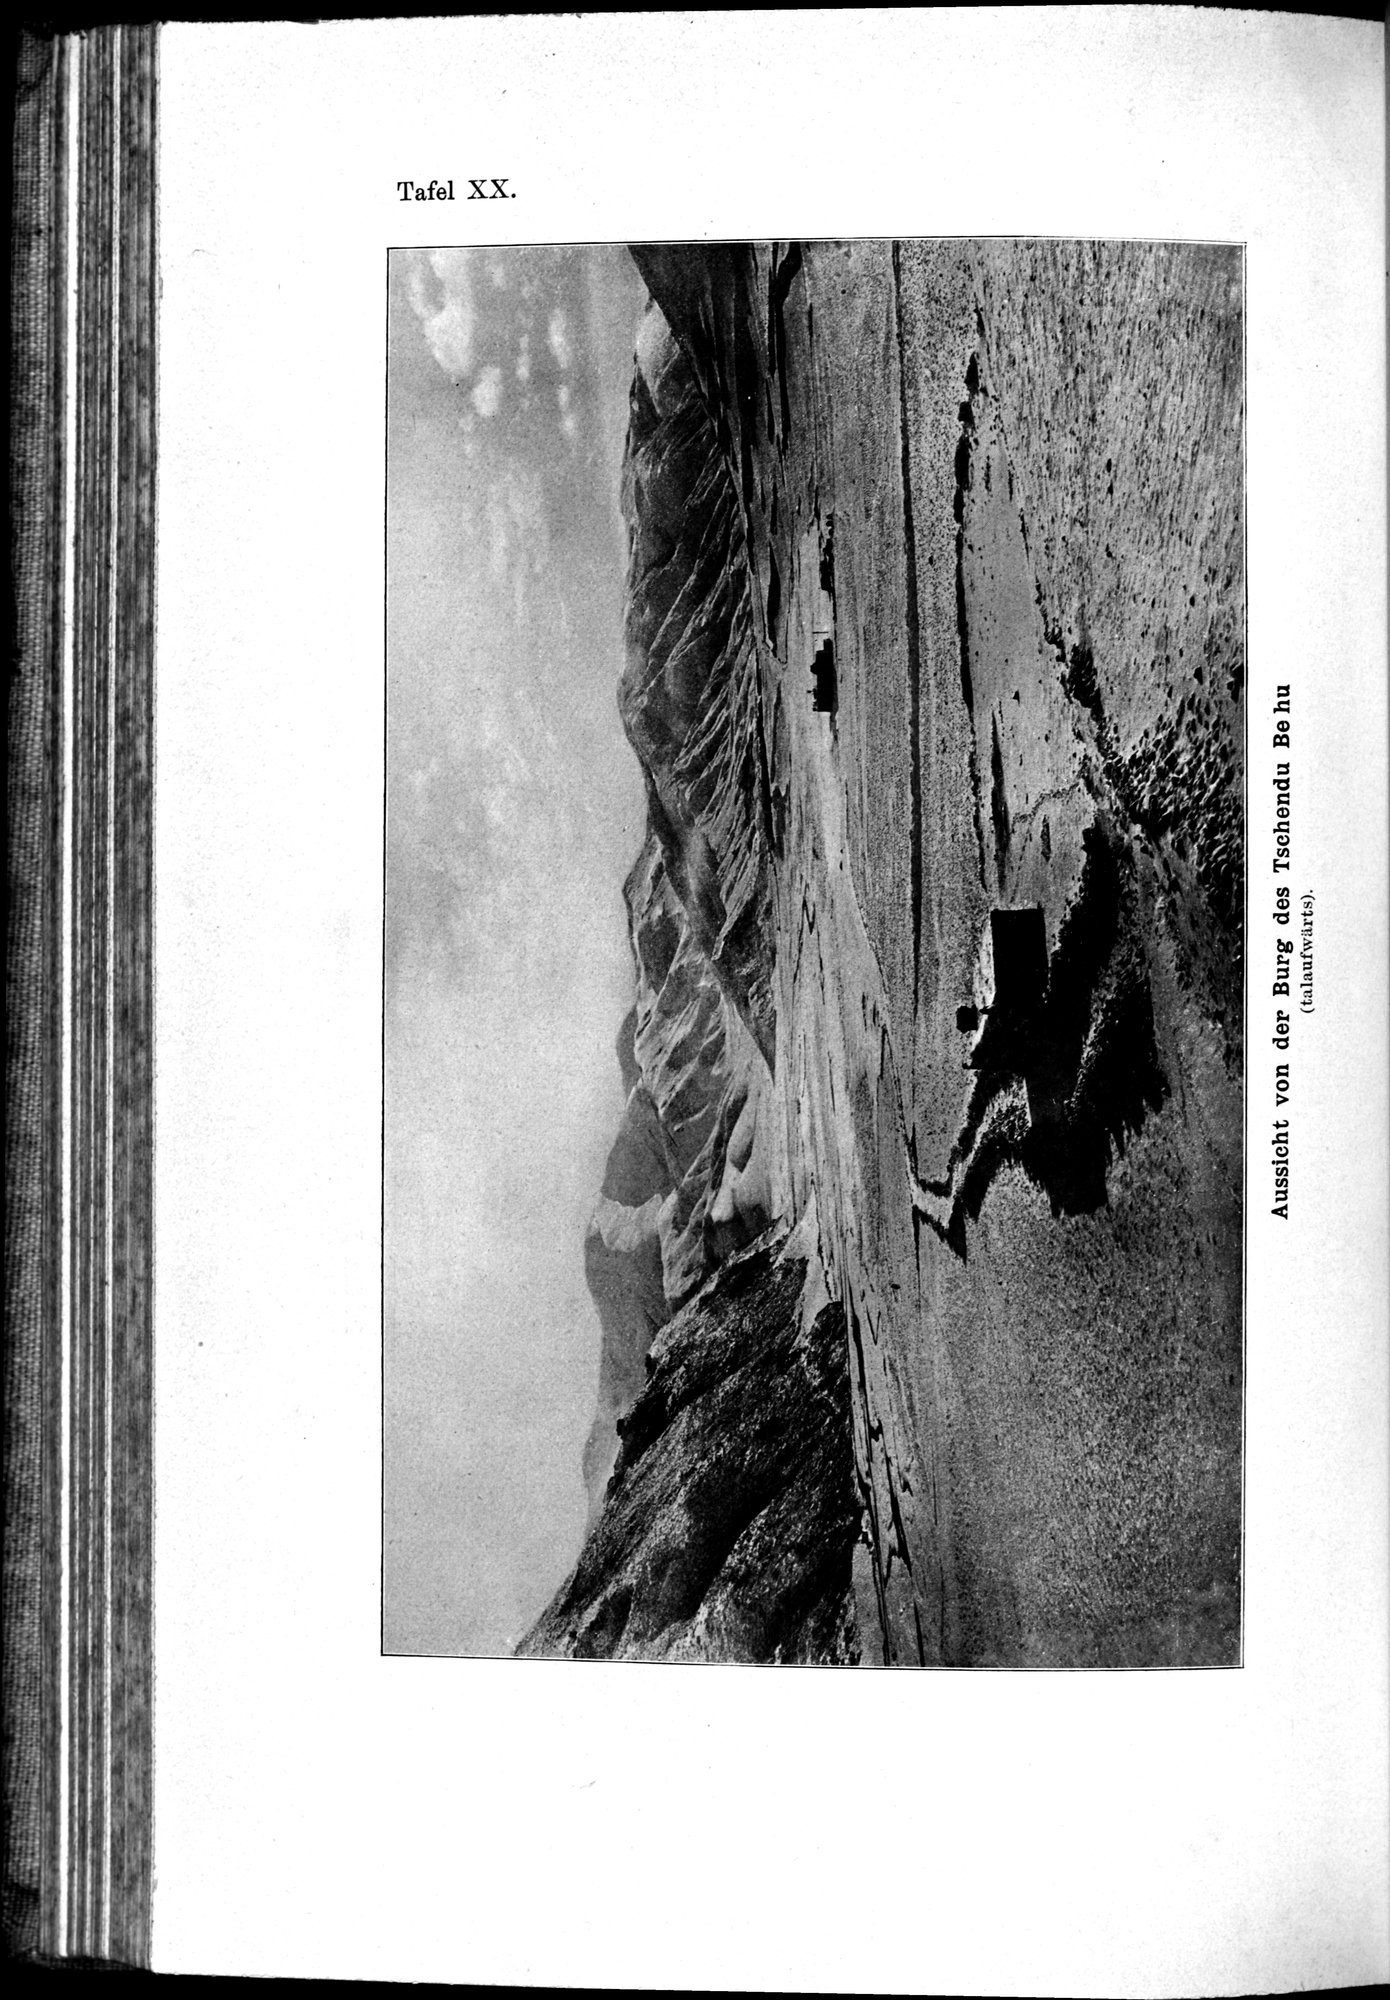 Meine Tibetreise : vol.2 / Page 134 (Grayscale High Resolution Image)